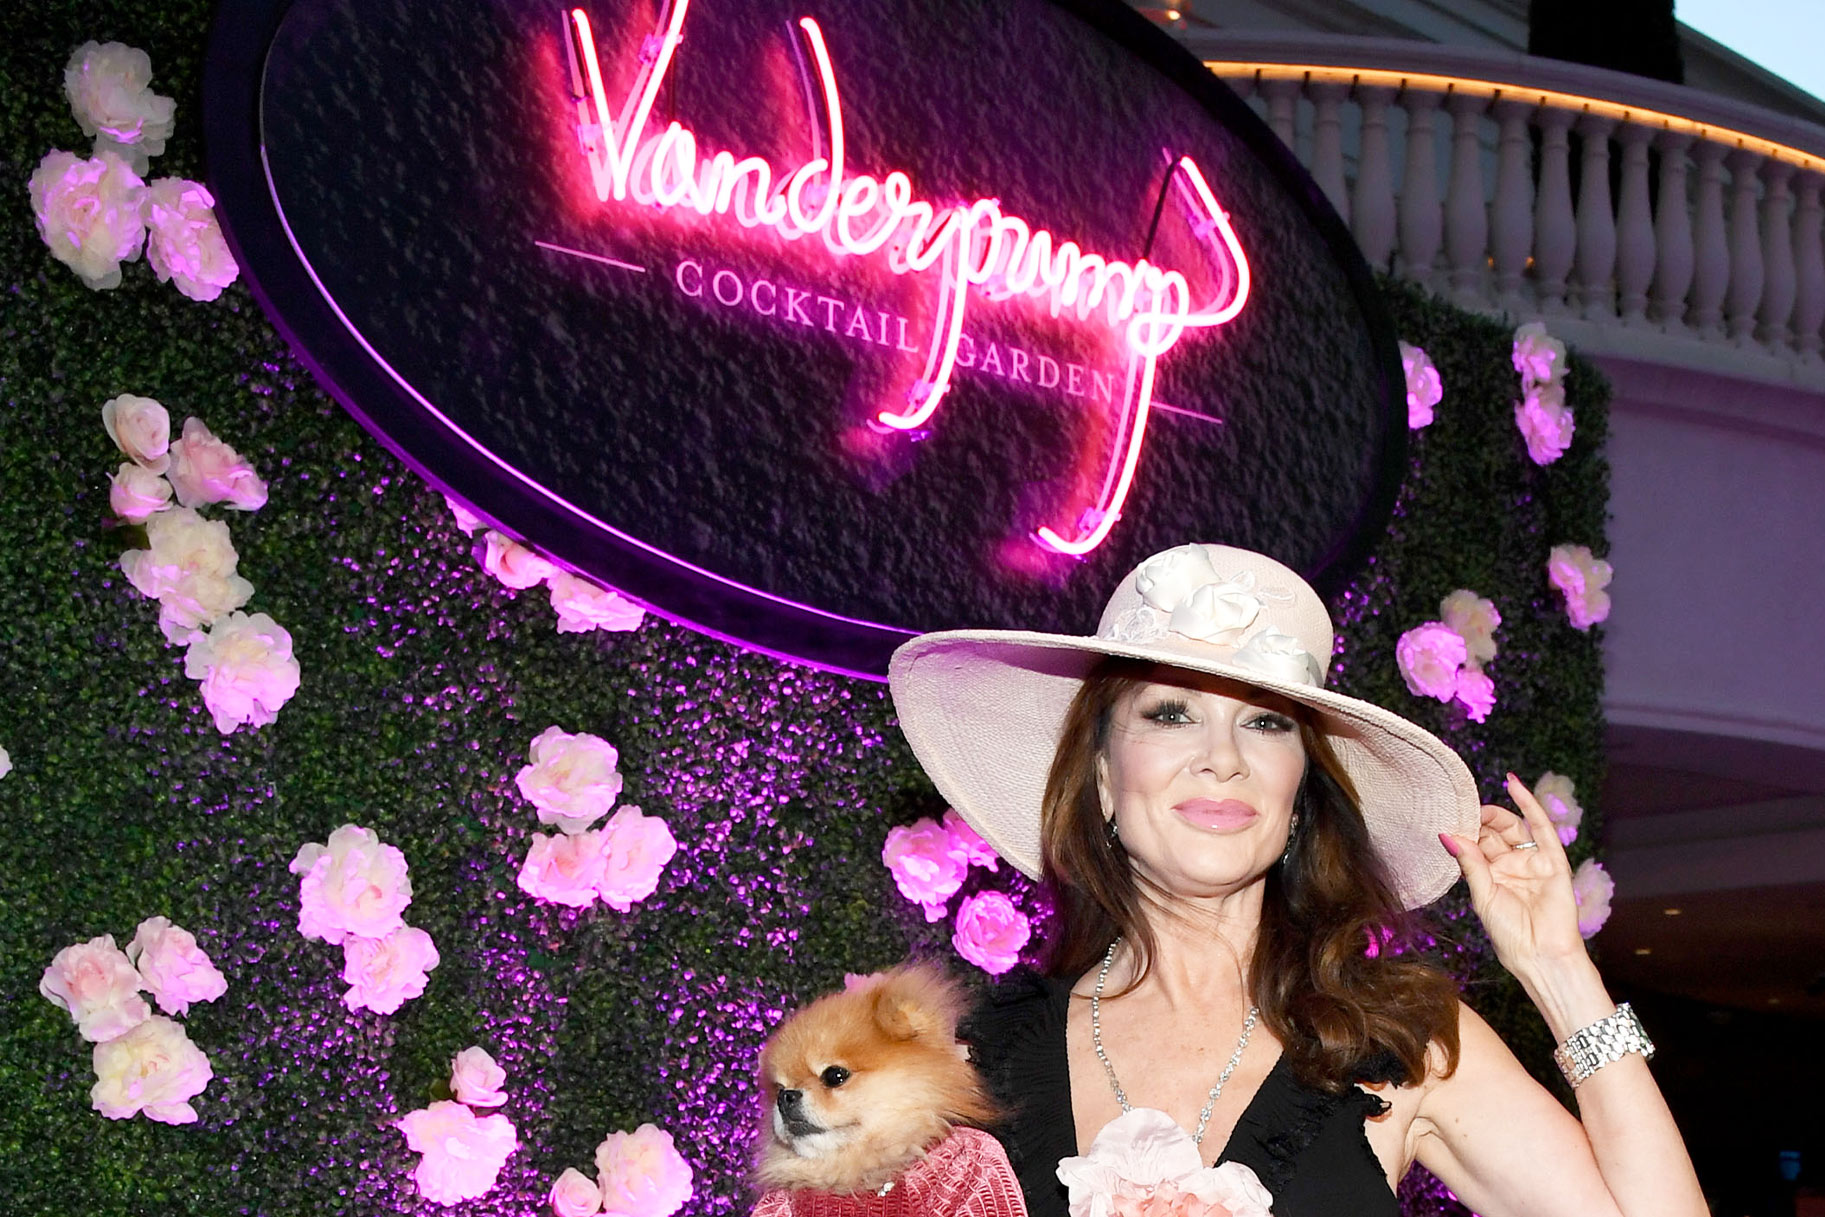 Vanderpump Cocktail Garden Grand Opening in Vegas Was Star-Studded